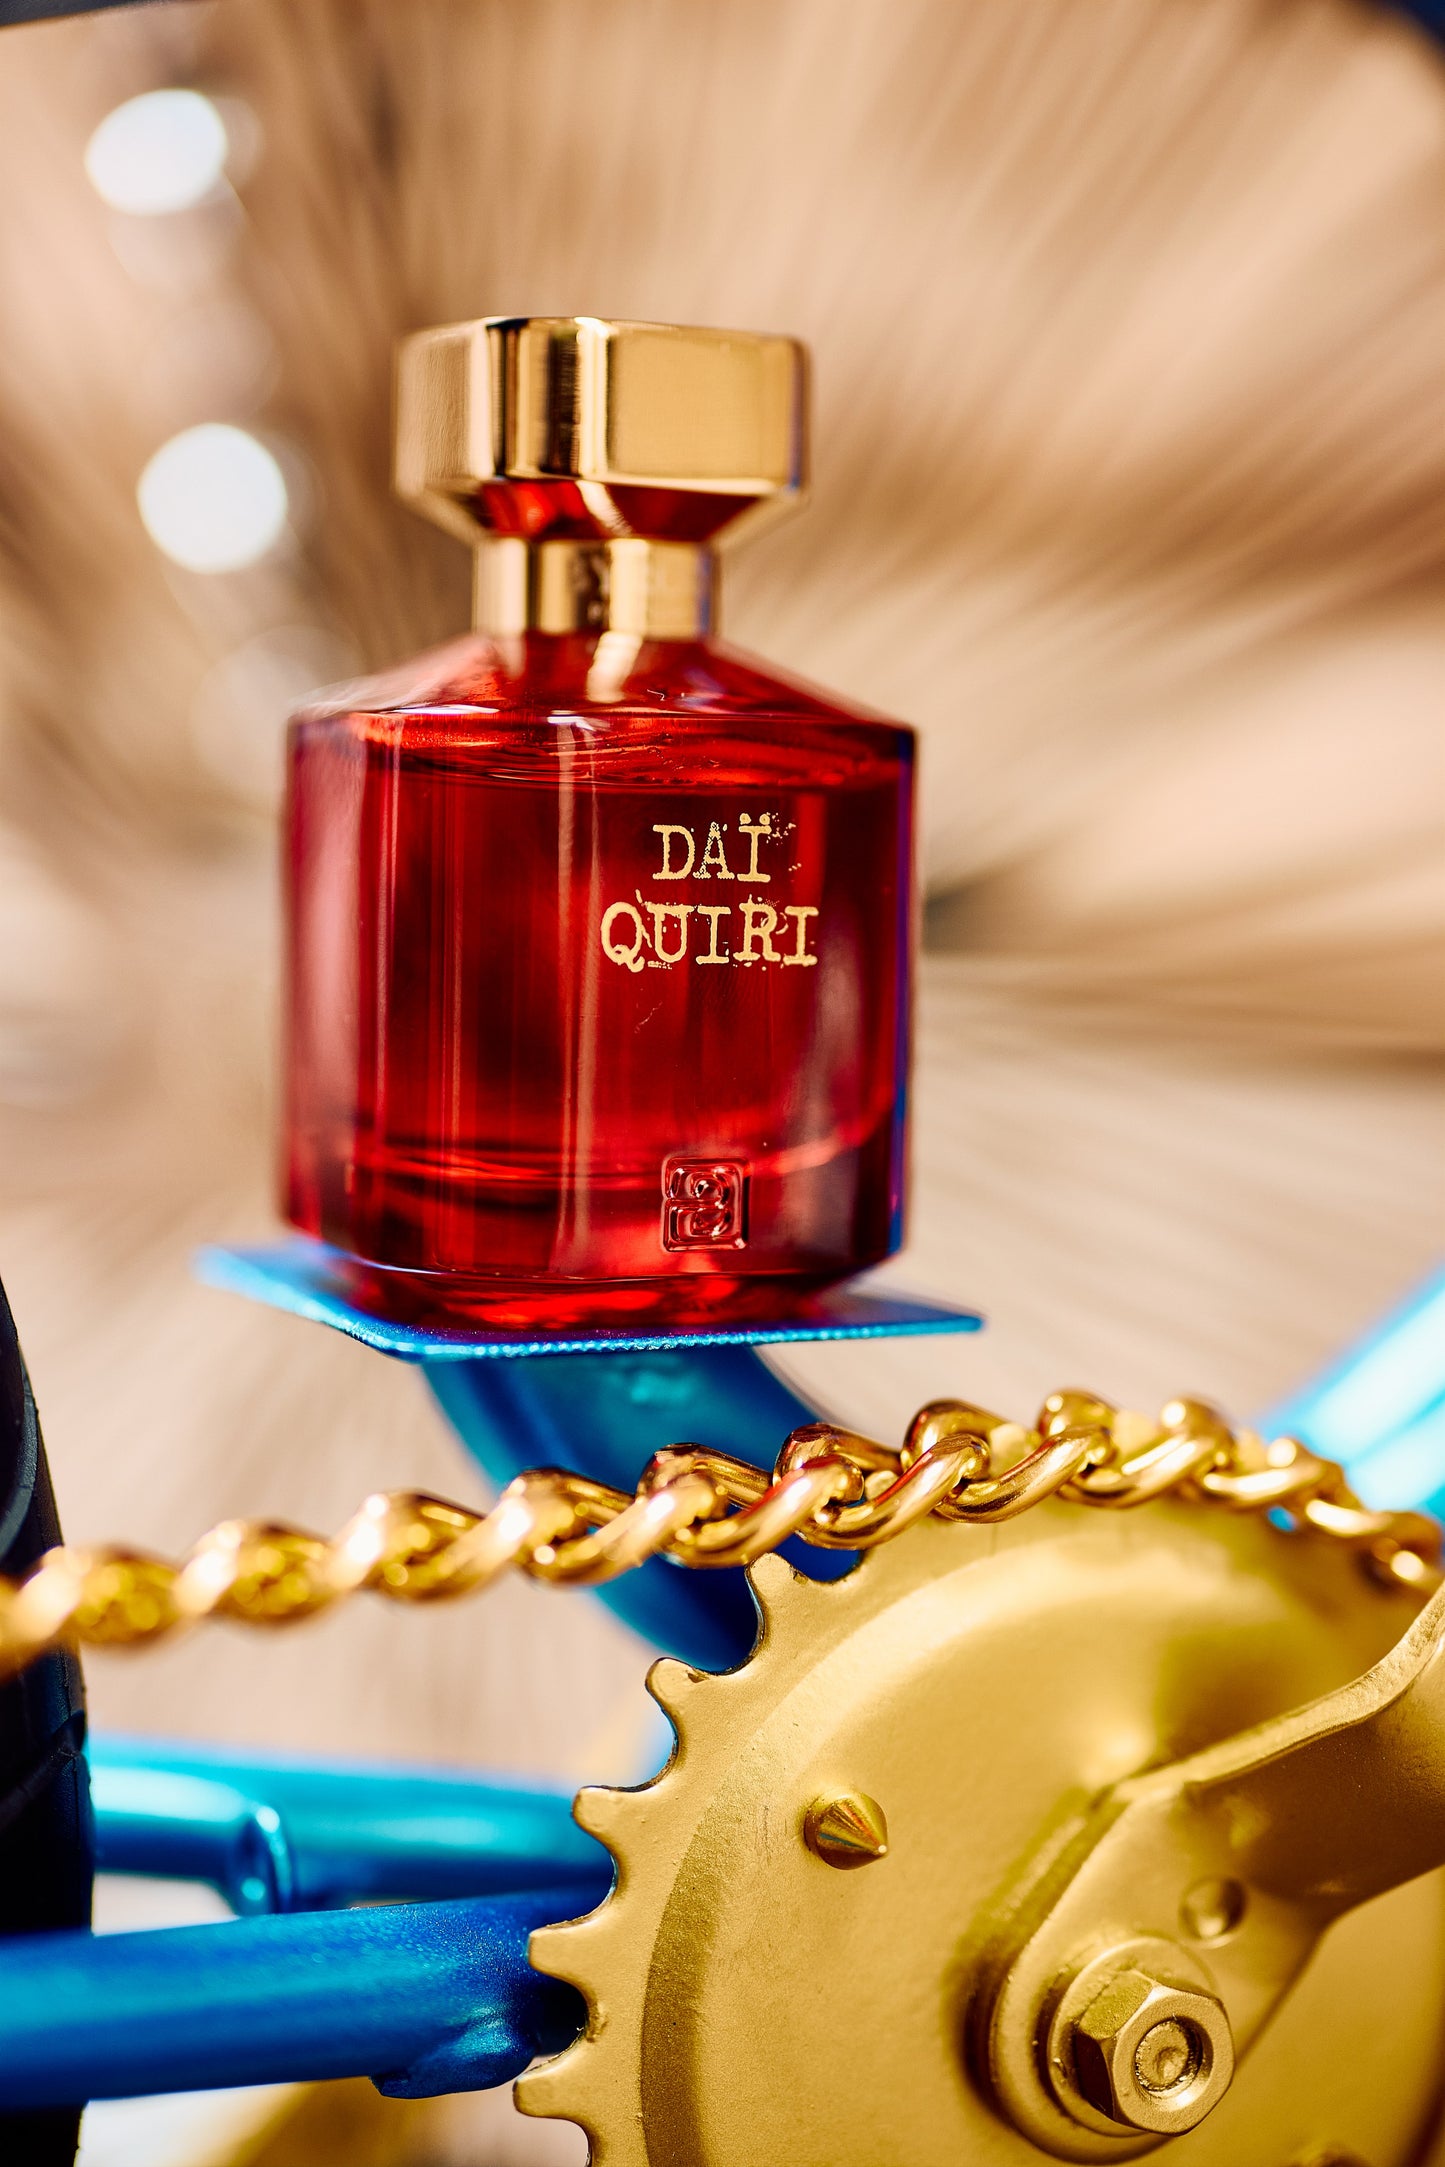 Daiquiri Byron Parfums Limited Edition Sample 2ml